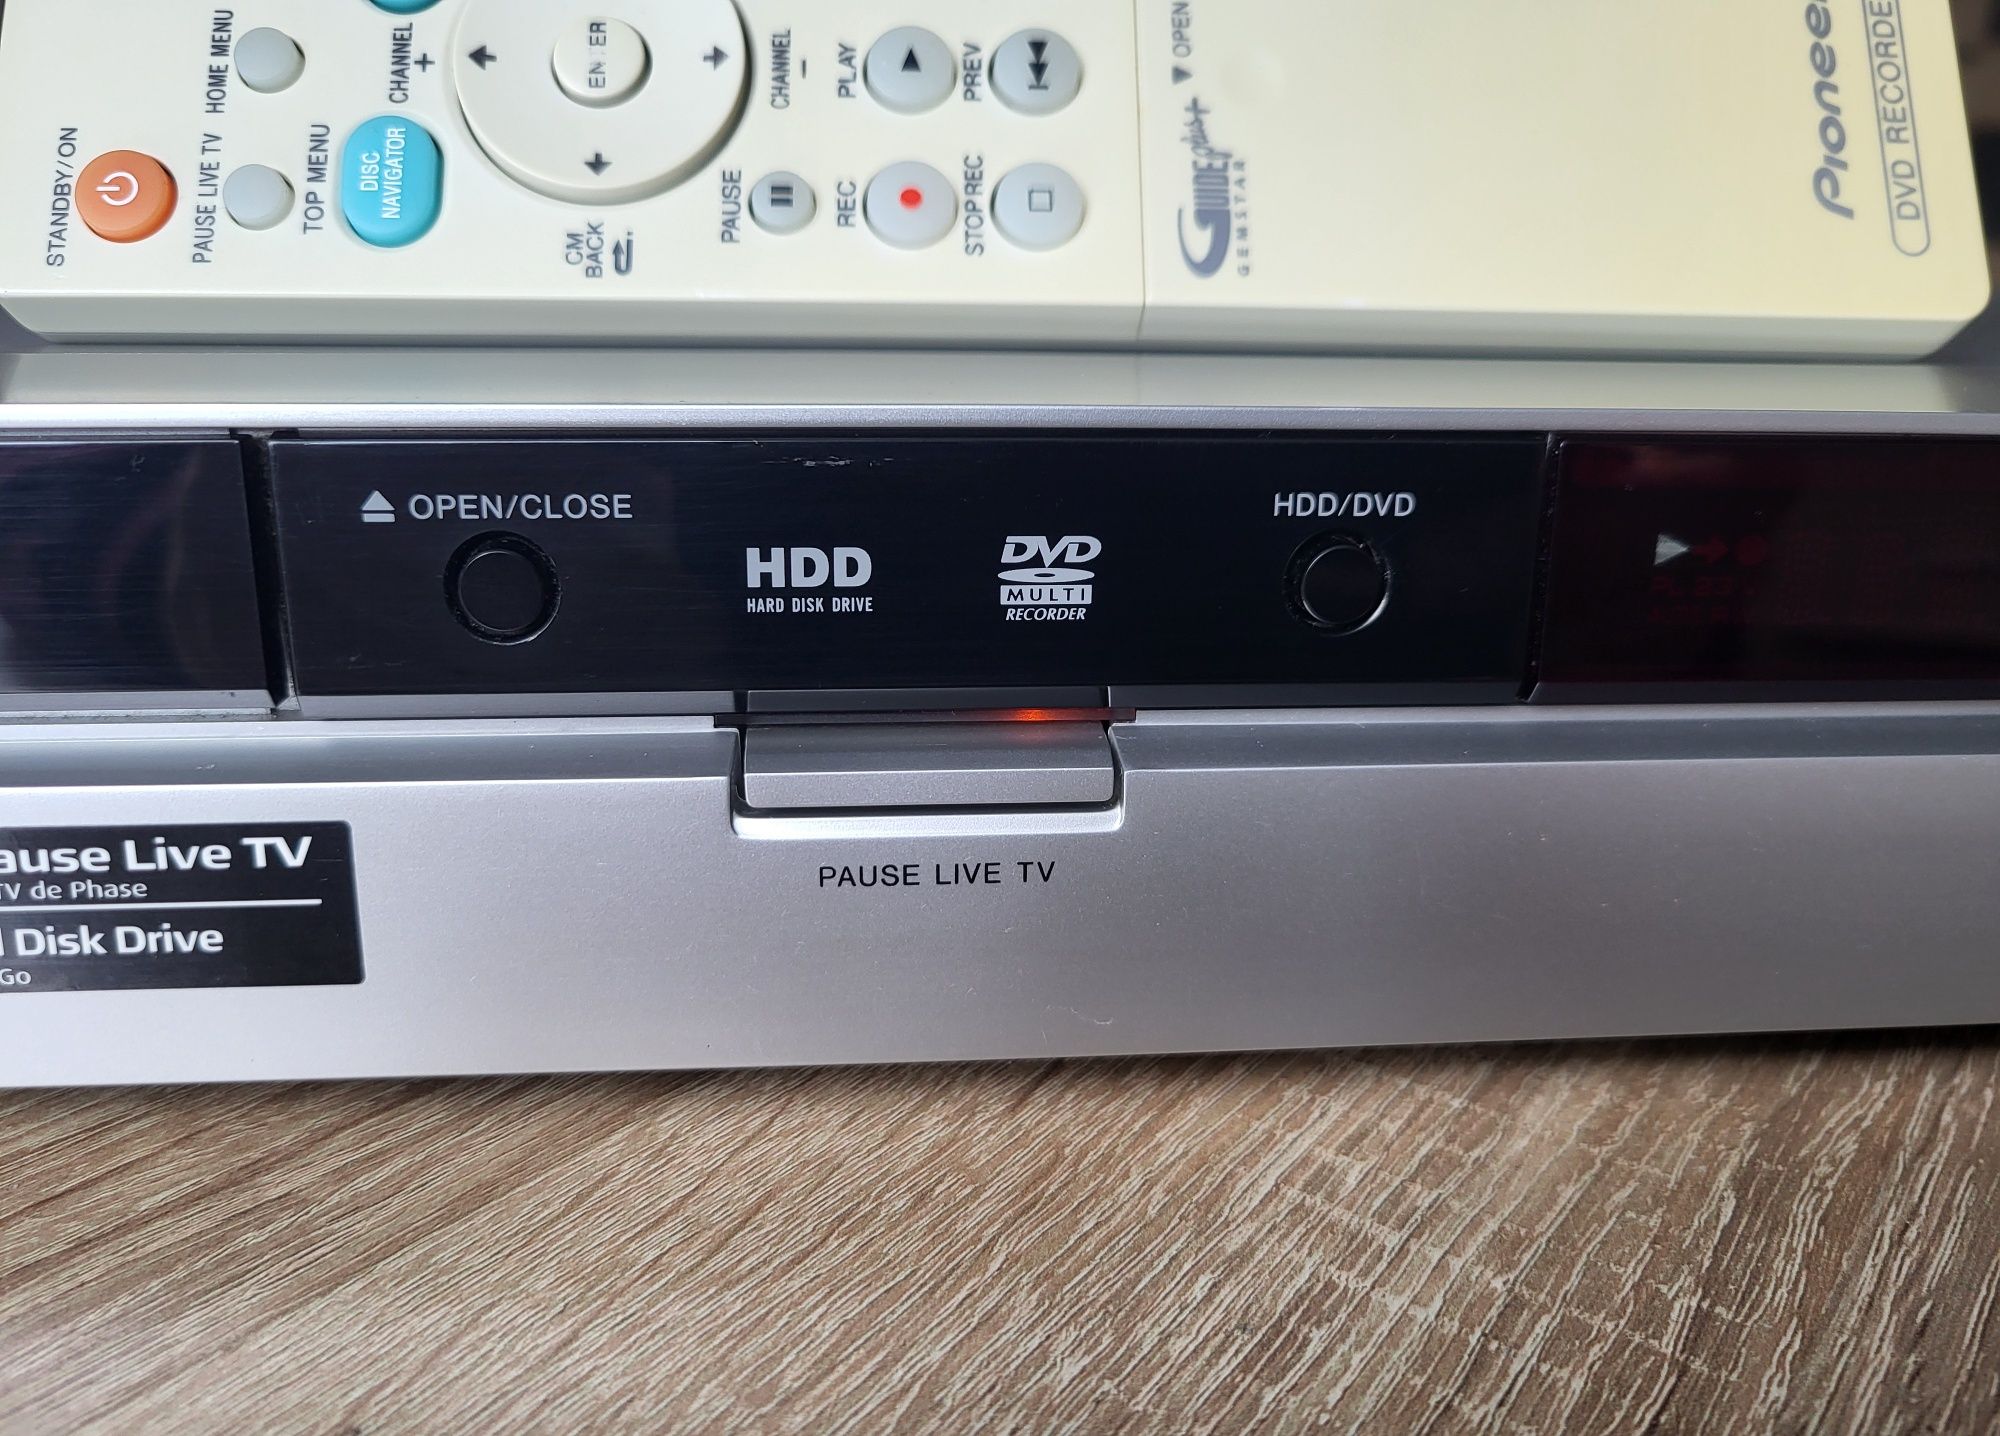 Pioneer DVR-540H #Nagrywarka DVD HDD #160GB #Dv-in #DivX #Pilot